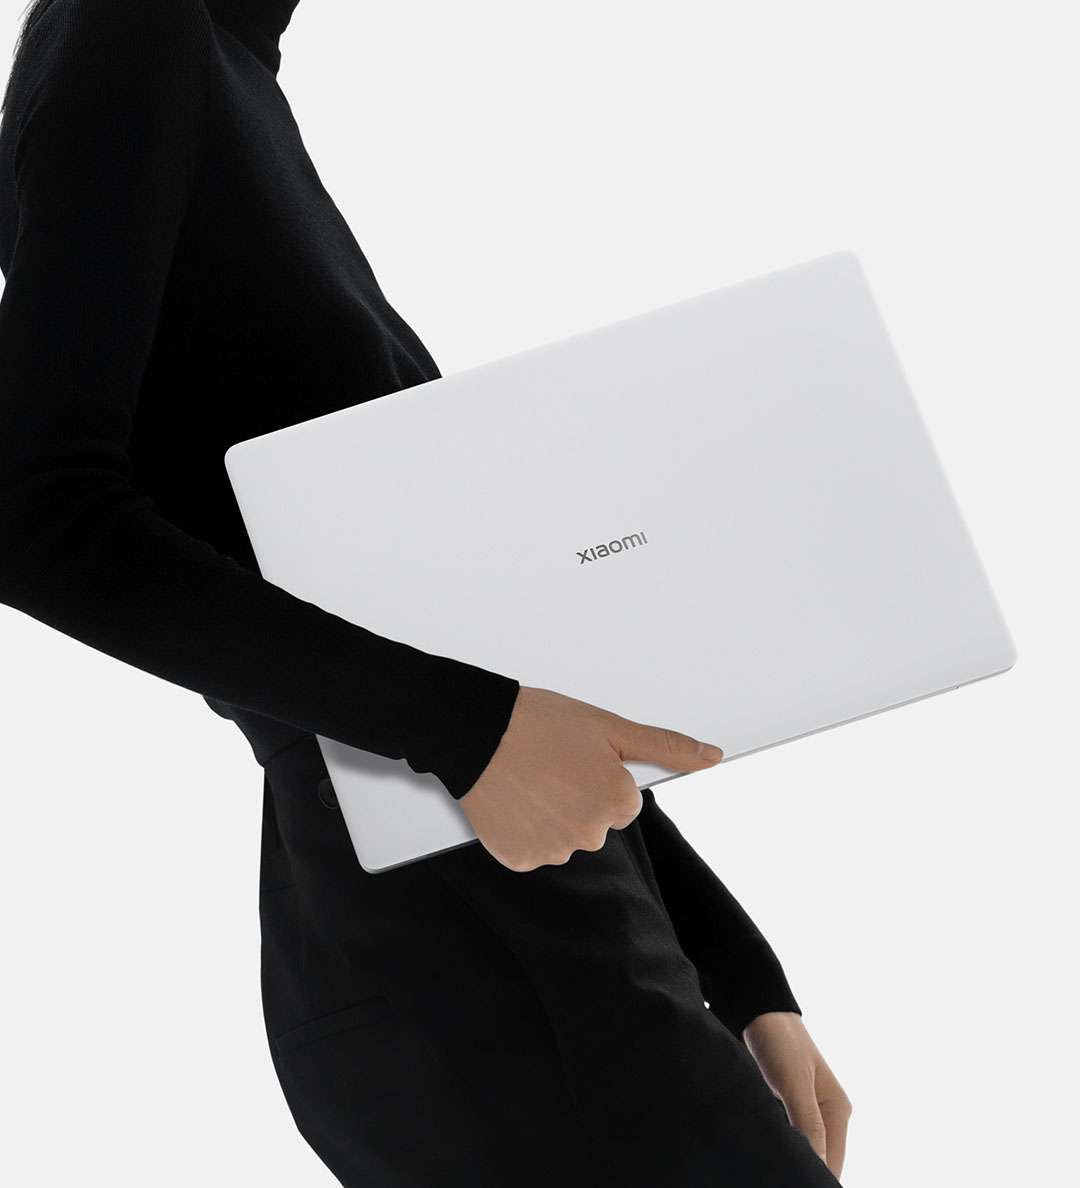 laptop-mi-notebook-pro-15-2021-win-tieng-anh-viet-brand-new